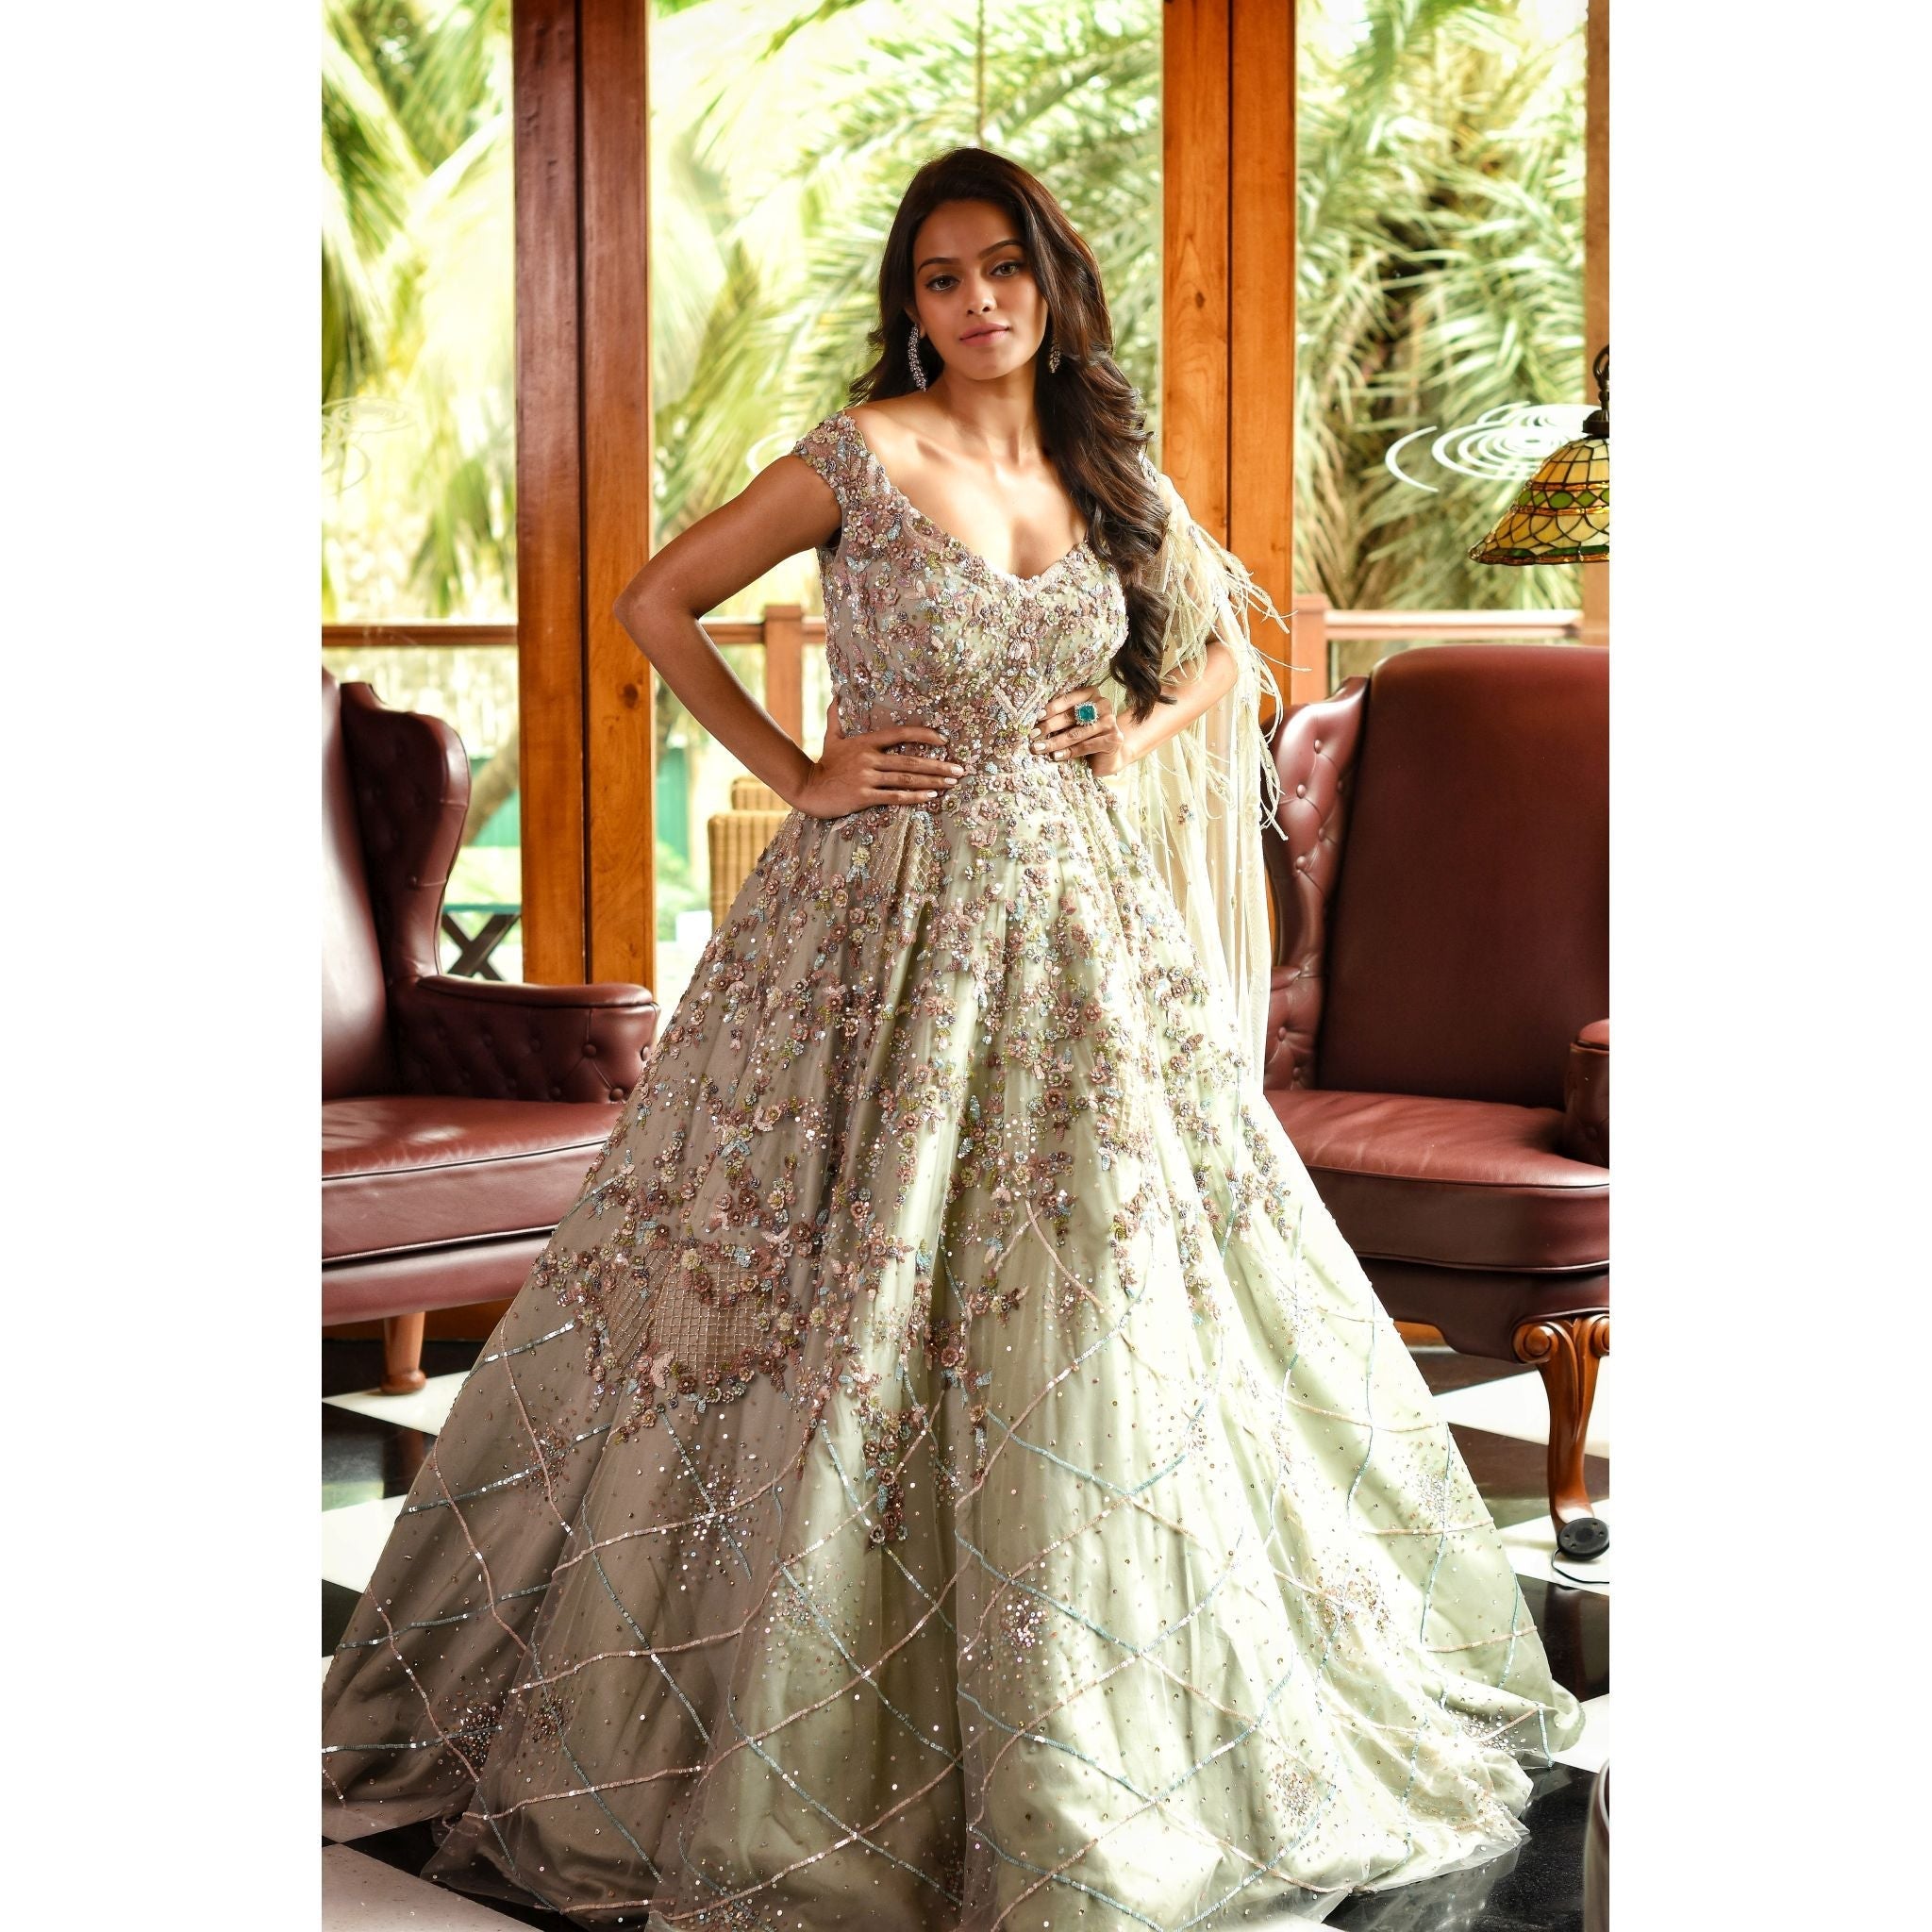 Sage Green Princess Gown - Indian Designer Bridal Wedding Outfit